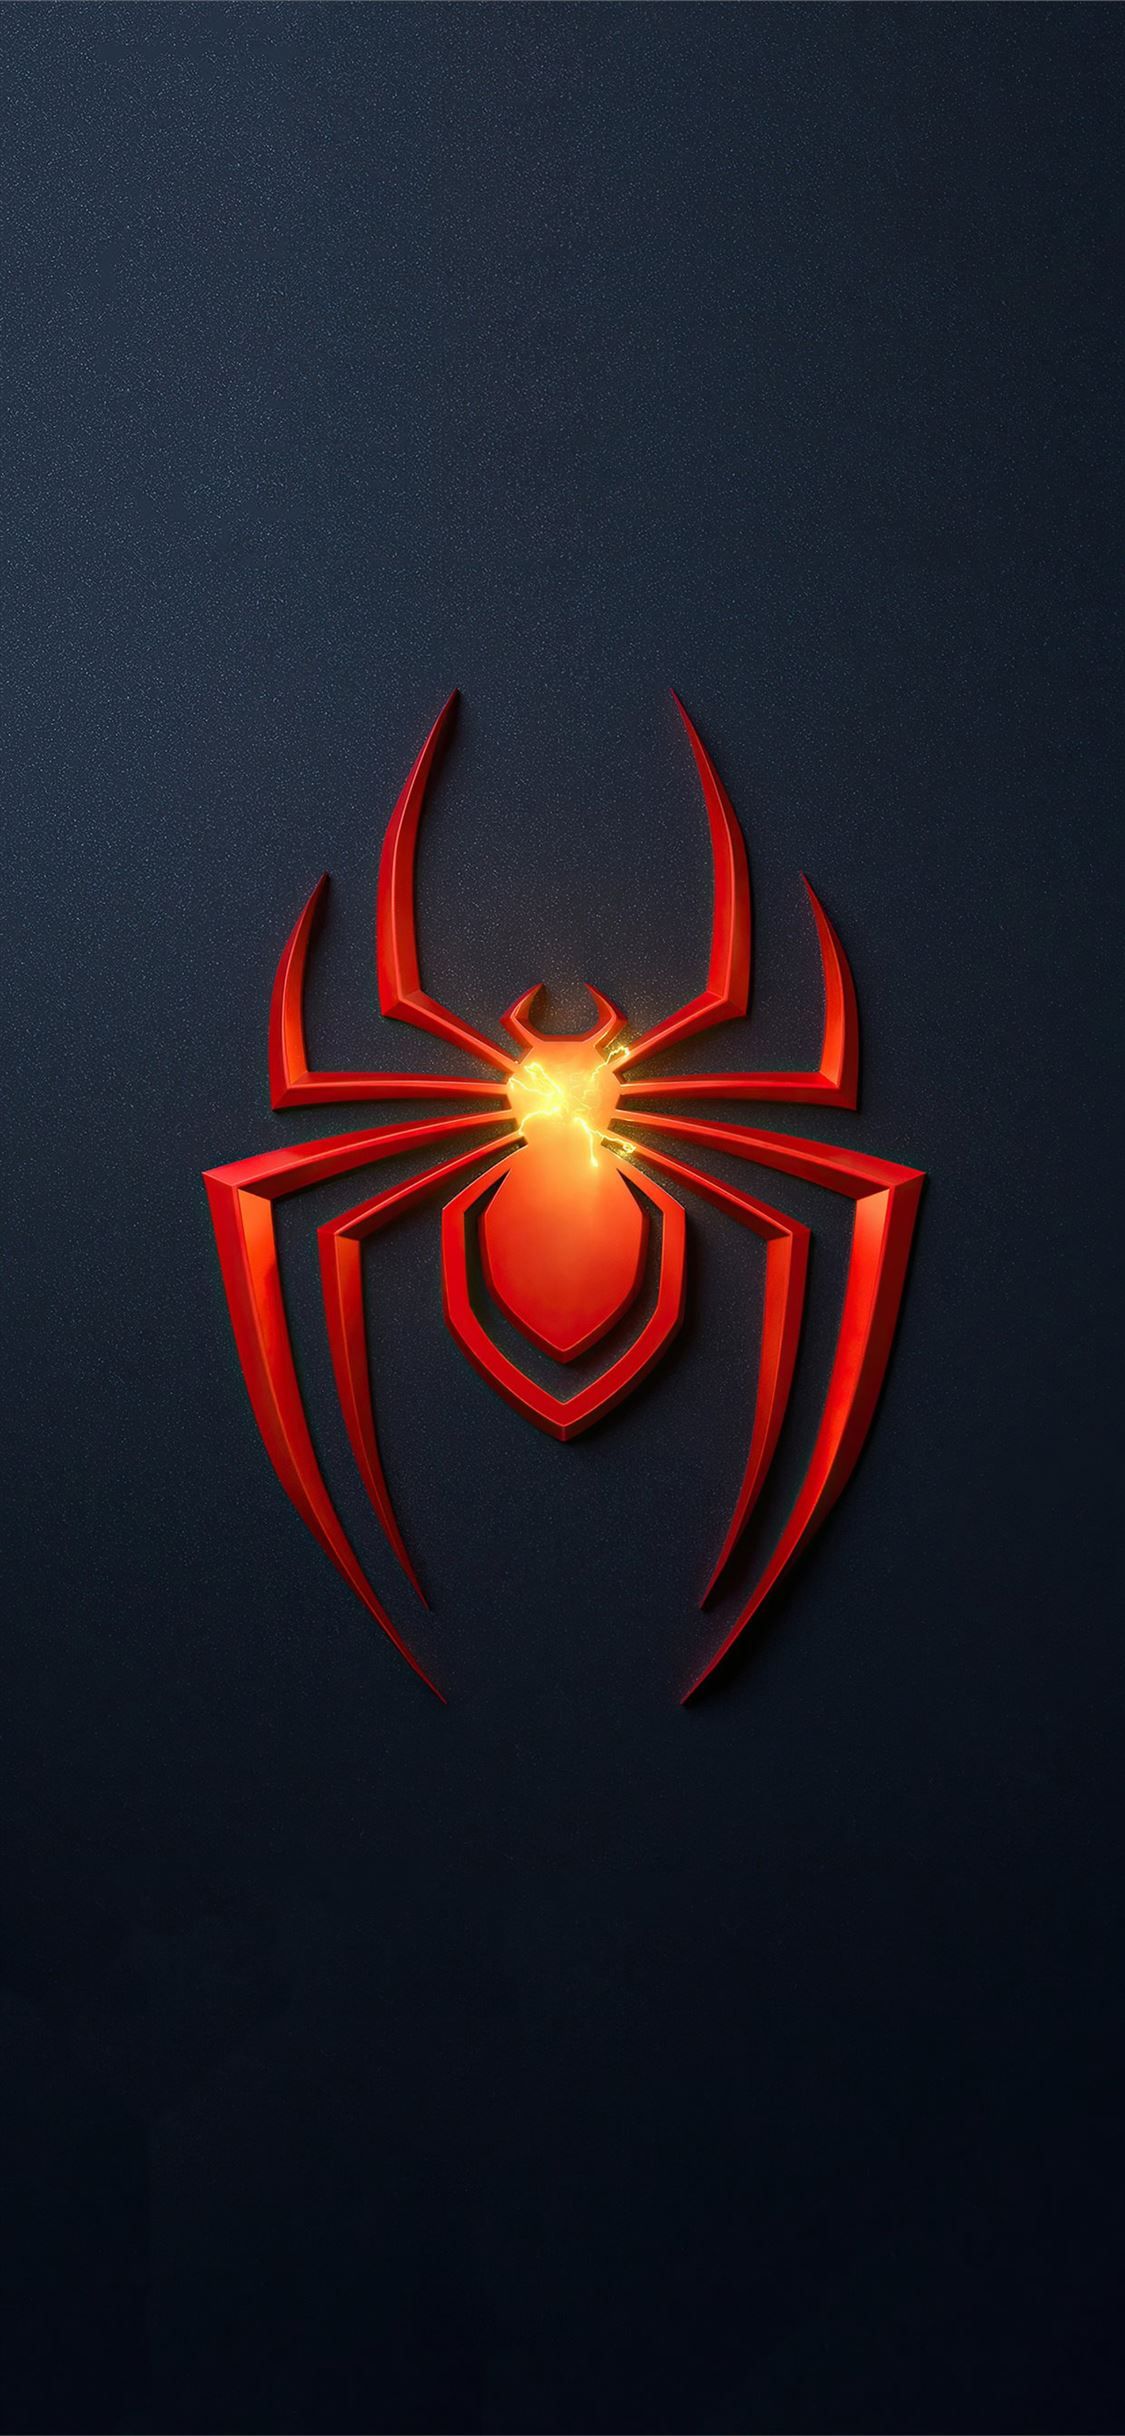 spider man miles morales ps5 game logo 4k iPhone X Wallpaper Free